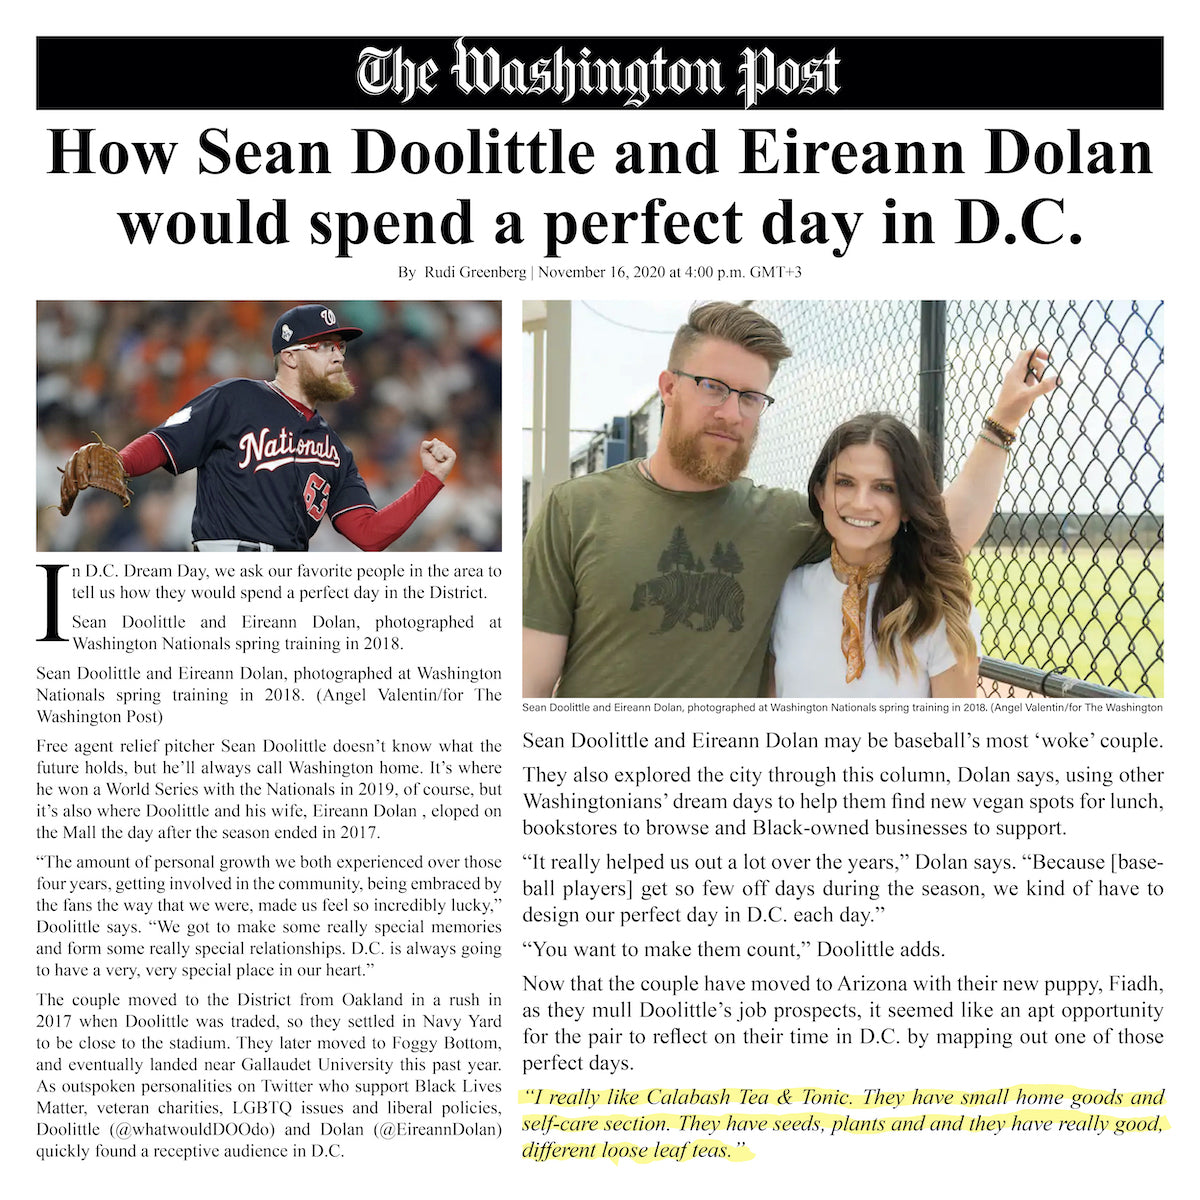 Sean Doolittle and Eireann Dolan may be baseball's most 'woke